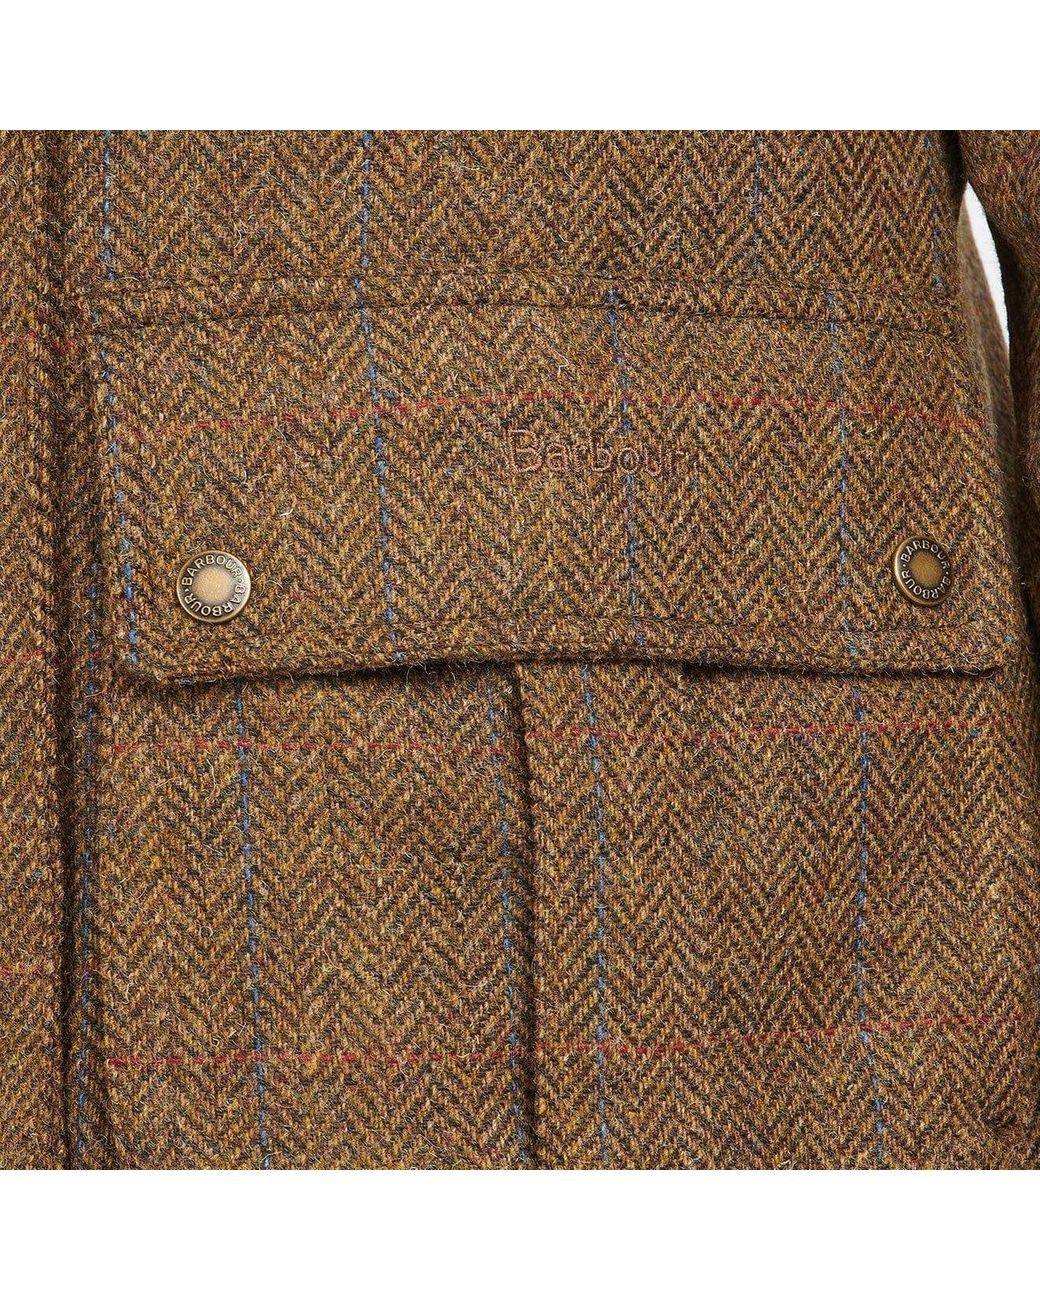 Barbour Fairfield Wool Jacket - Save 31% | Lyst